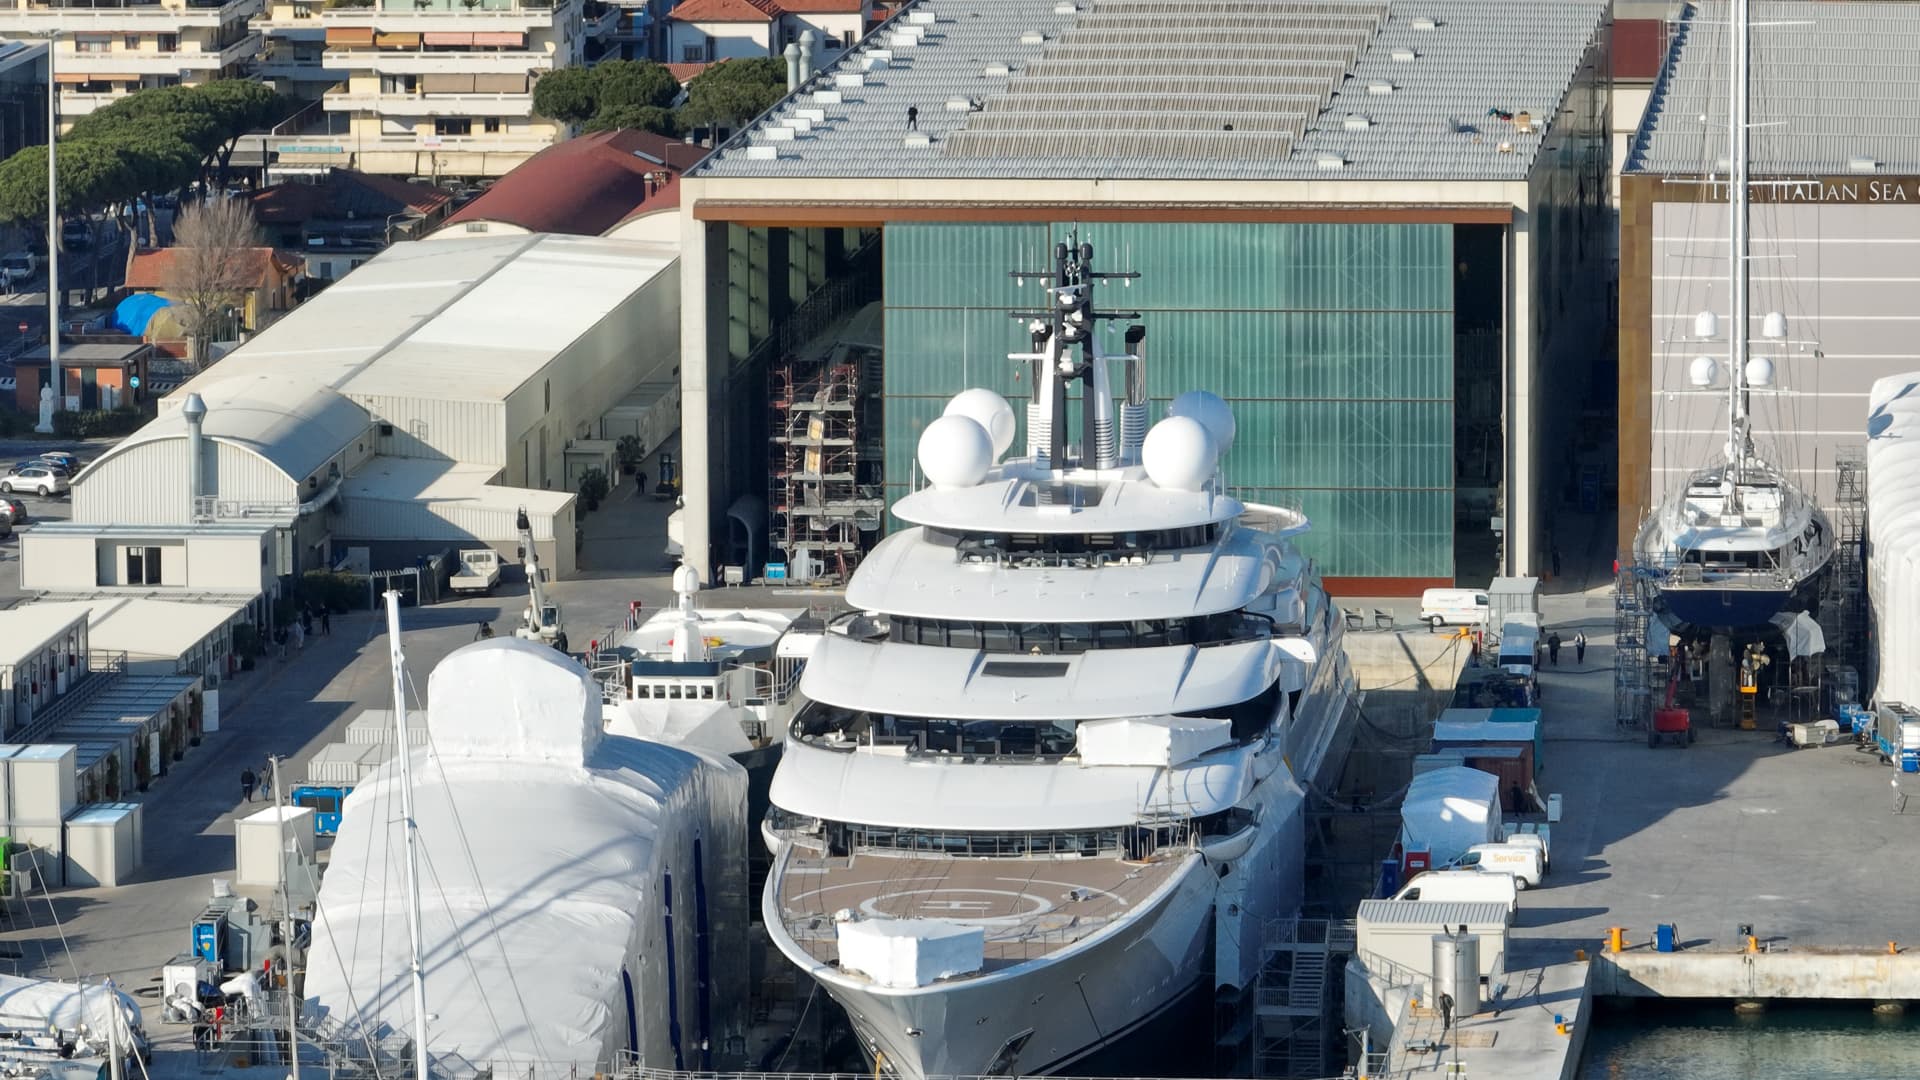 The Scheherazade 459-foot superyacht docked at the shipyard in Marina Di Carrara, Italy, on Wednesday, March 23, 2022.